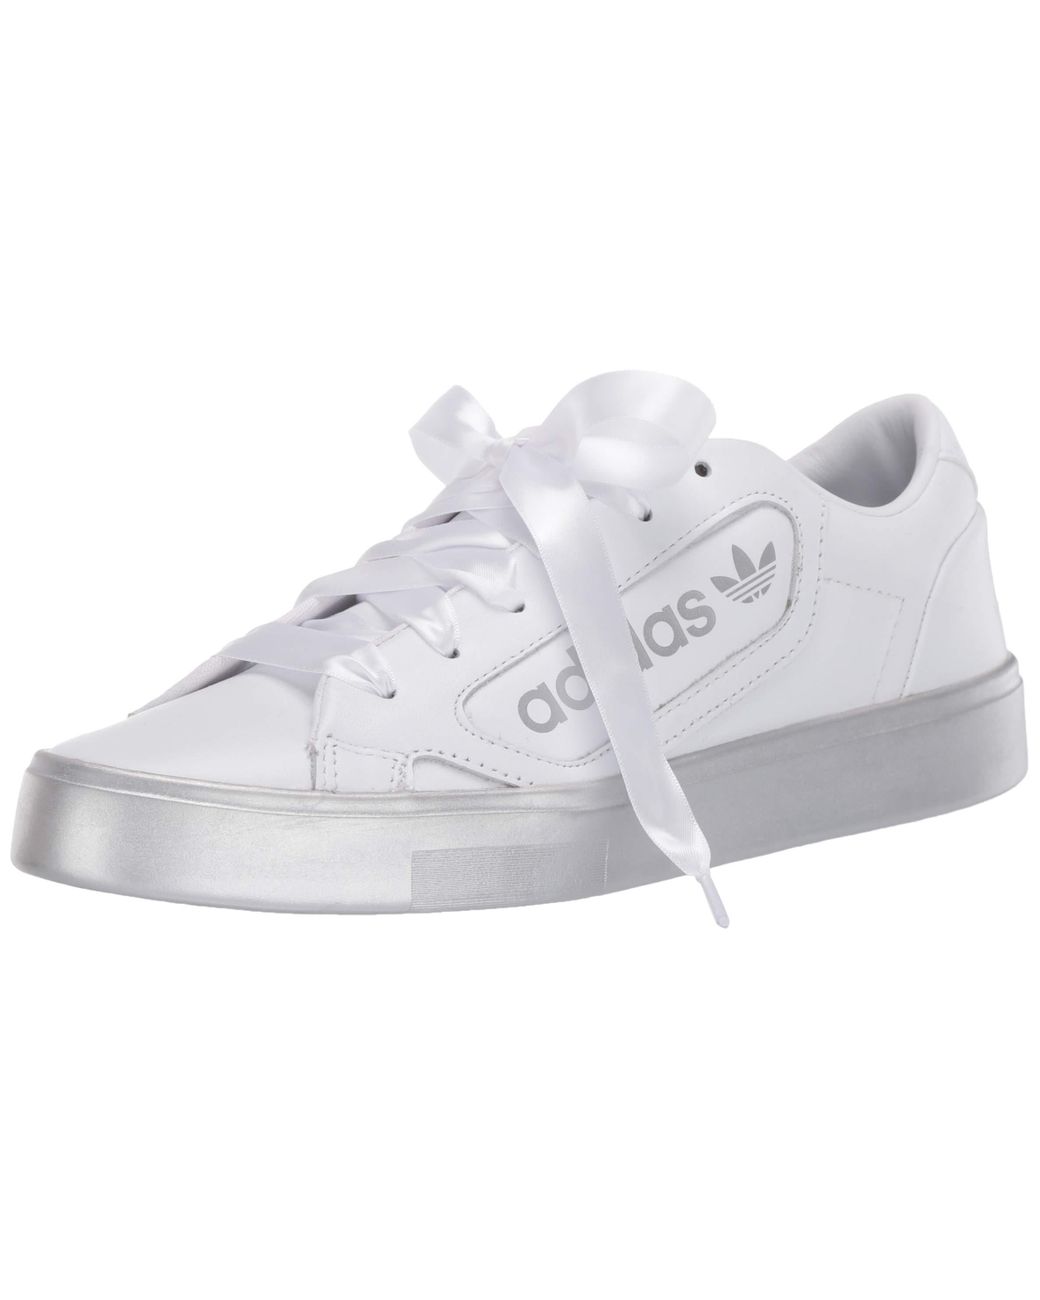 adidas Originals Sleek - Women's Sneakers - White / Silver Metallic /  Silver Metallic, Size 6.5 | Lyst